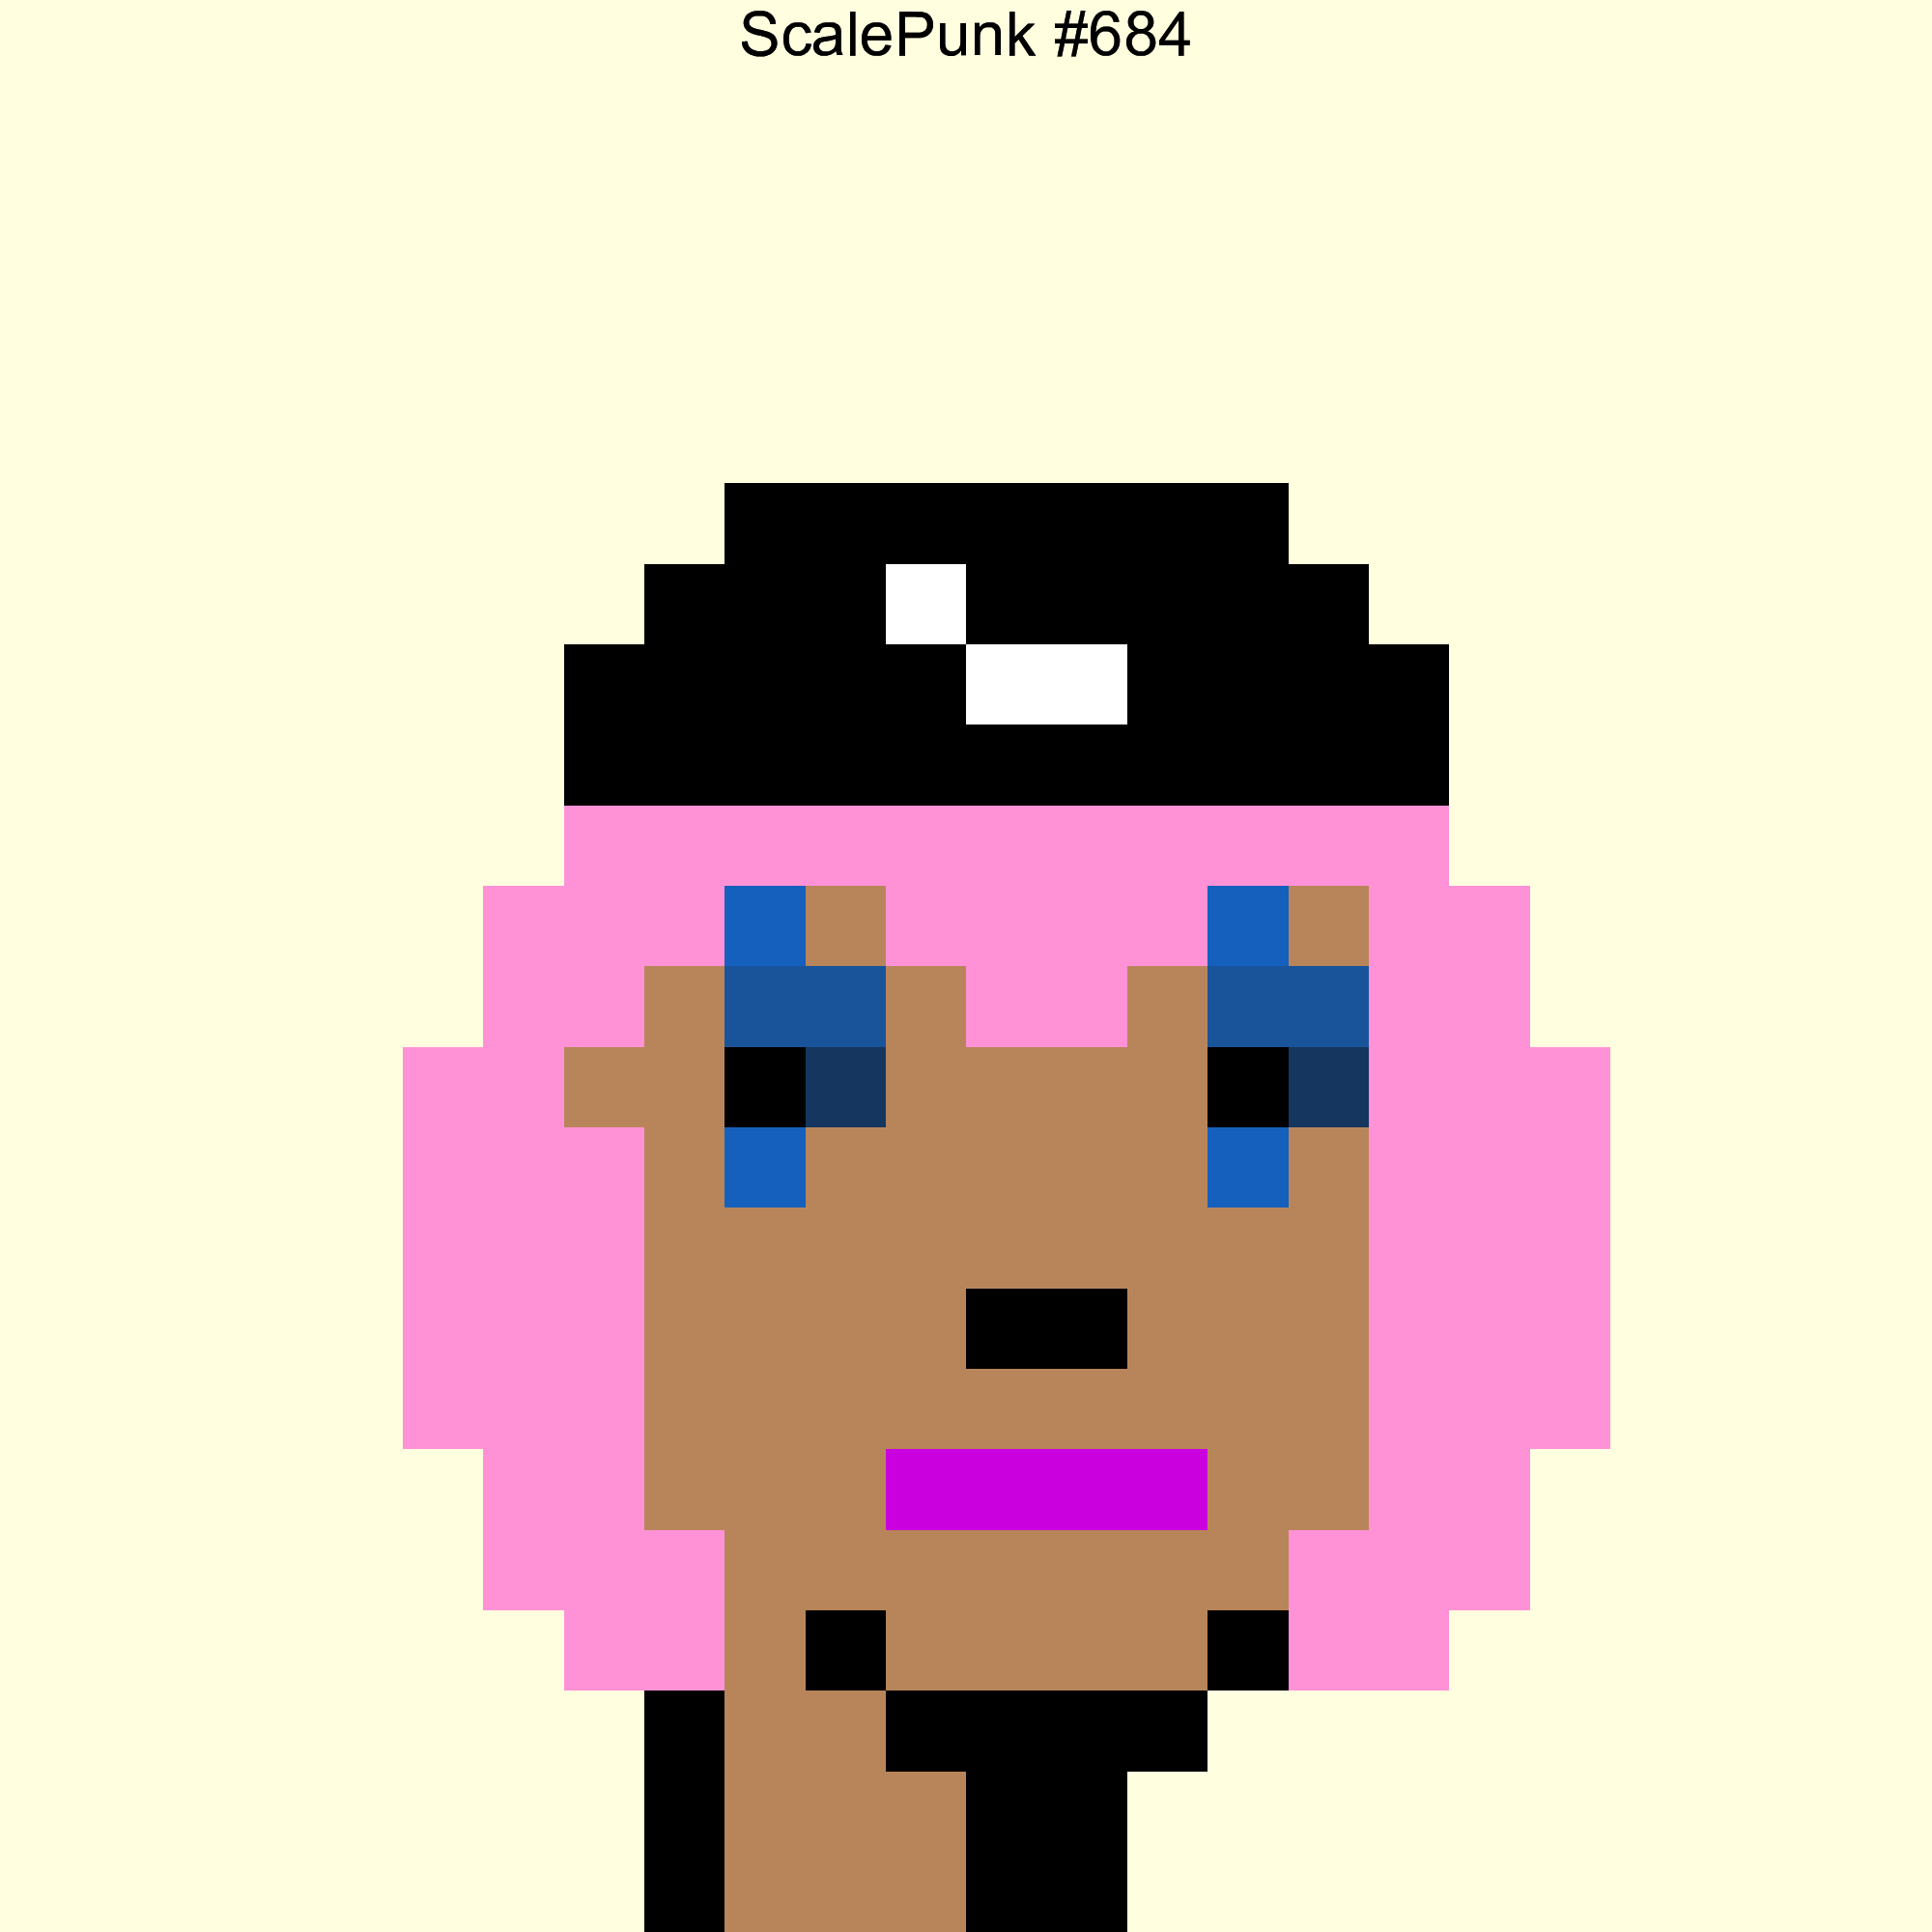 Punk 684